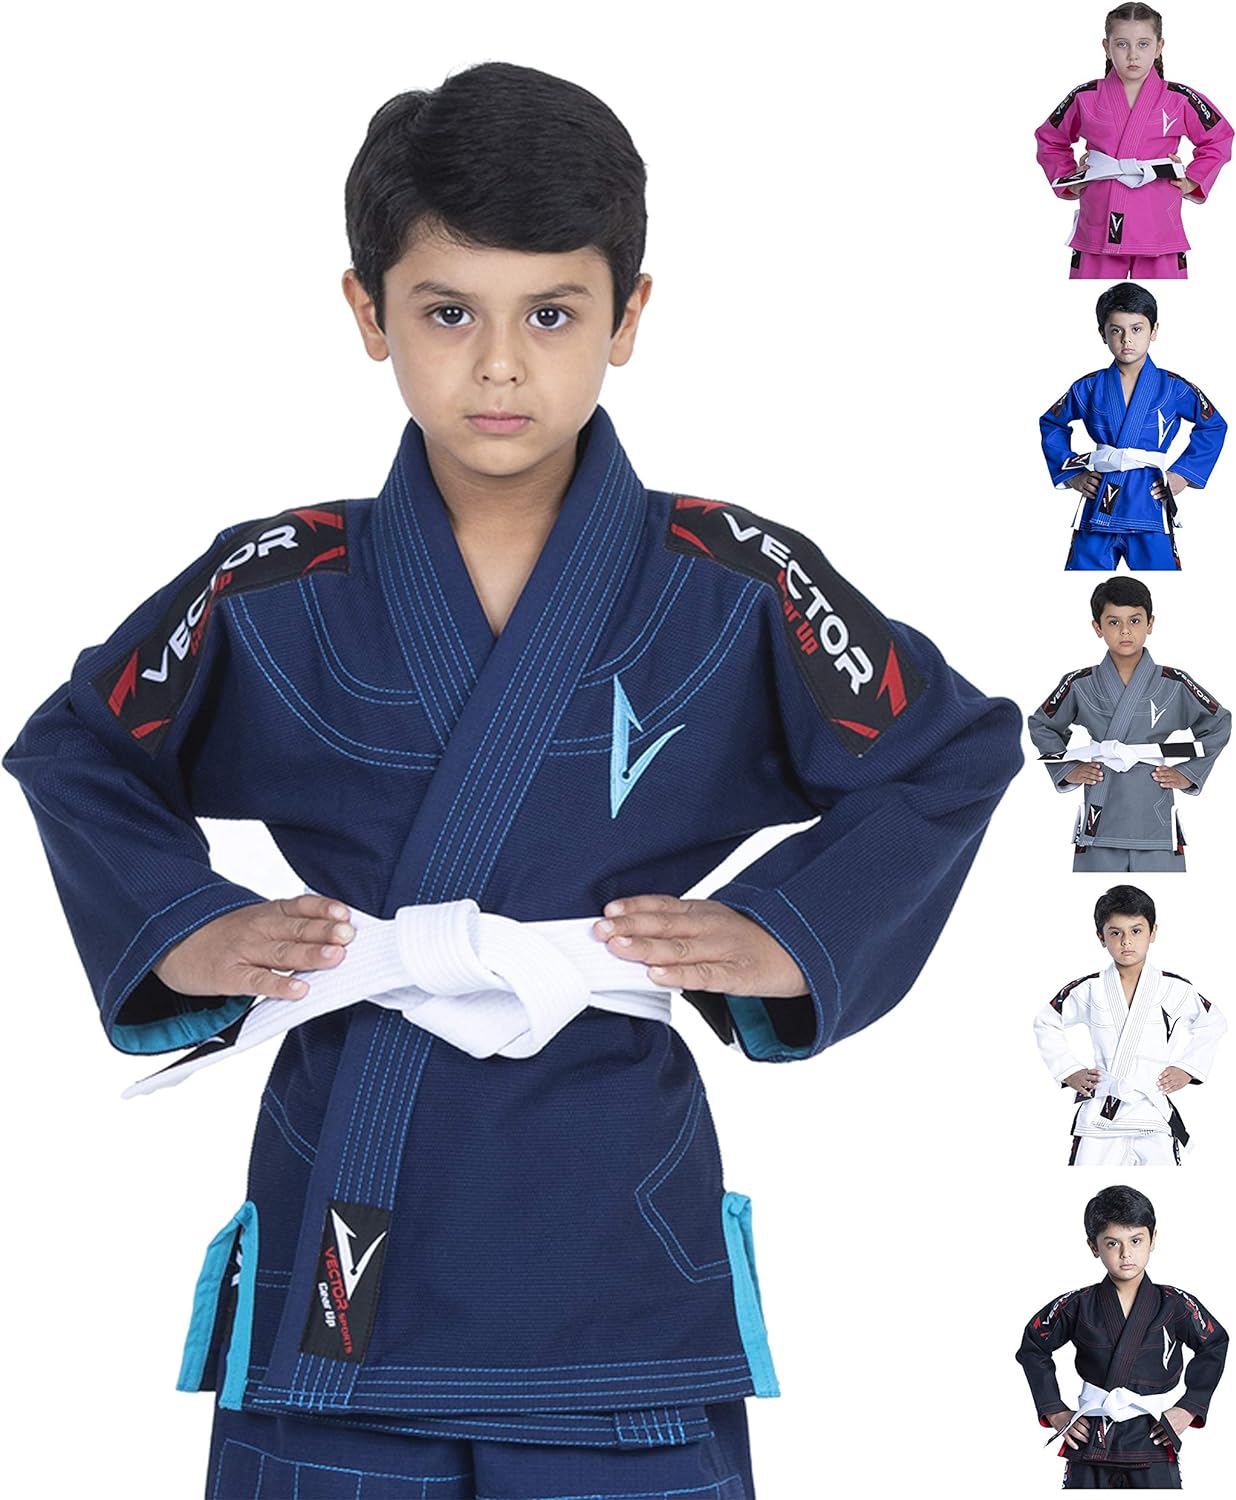 Eclipse Martial Art Supplies sporting goods K0 / Navy Brazilian BJJ Gi Jiu Jitsu Gi for Child Kids Gi Uniform Durable Pant & Jacket 100% Cotton with Free Belt